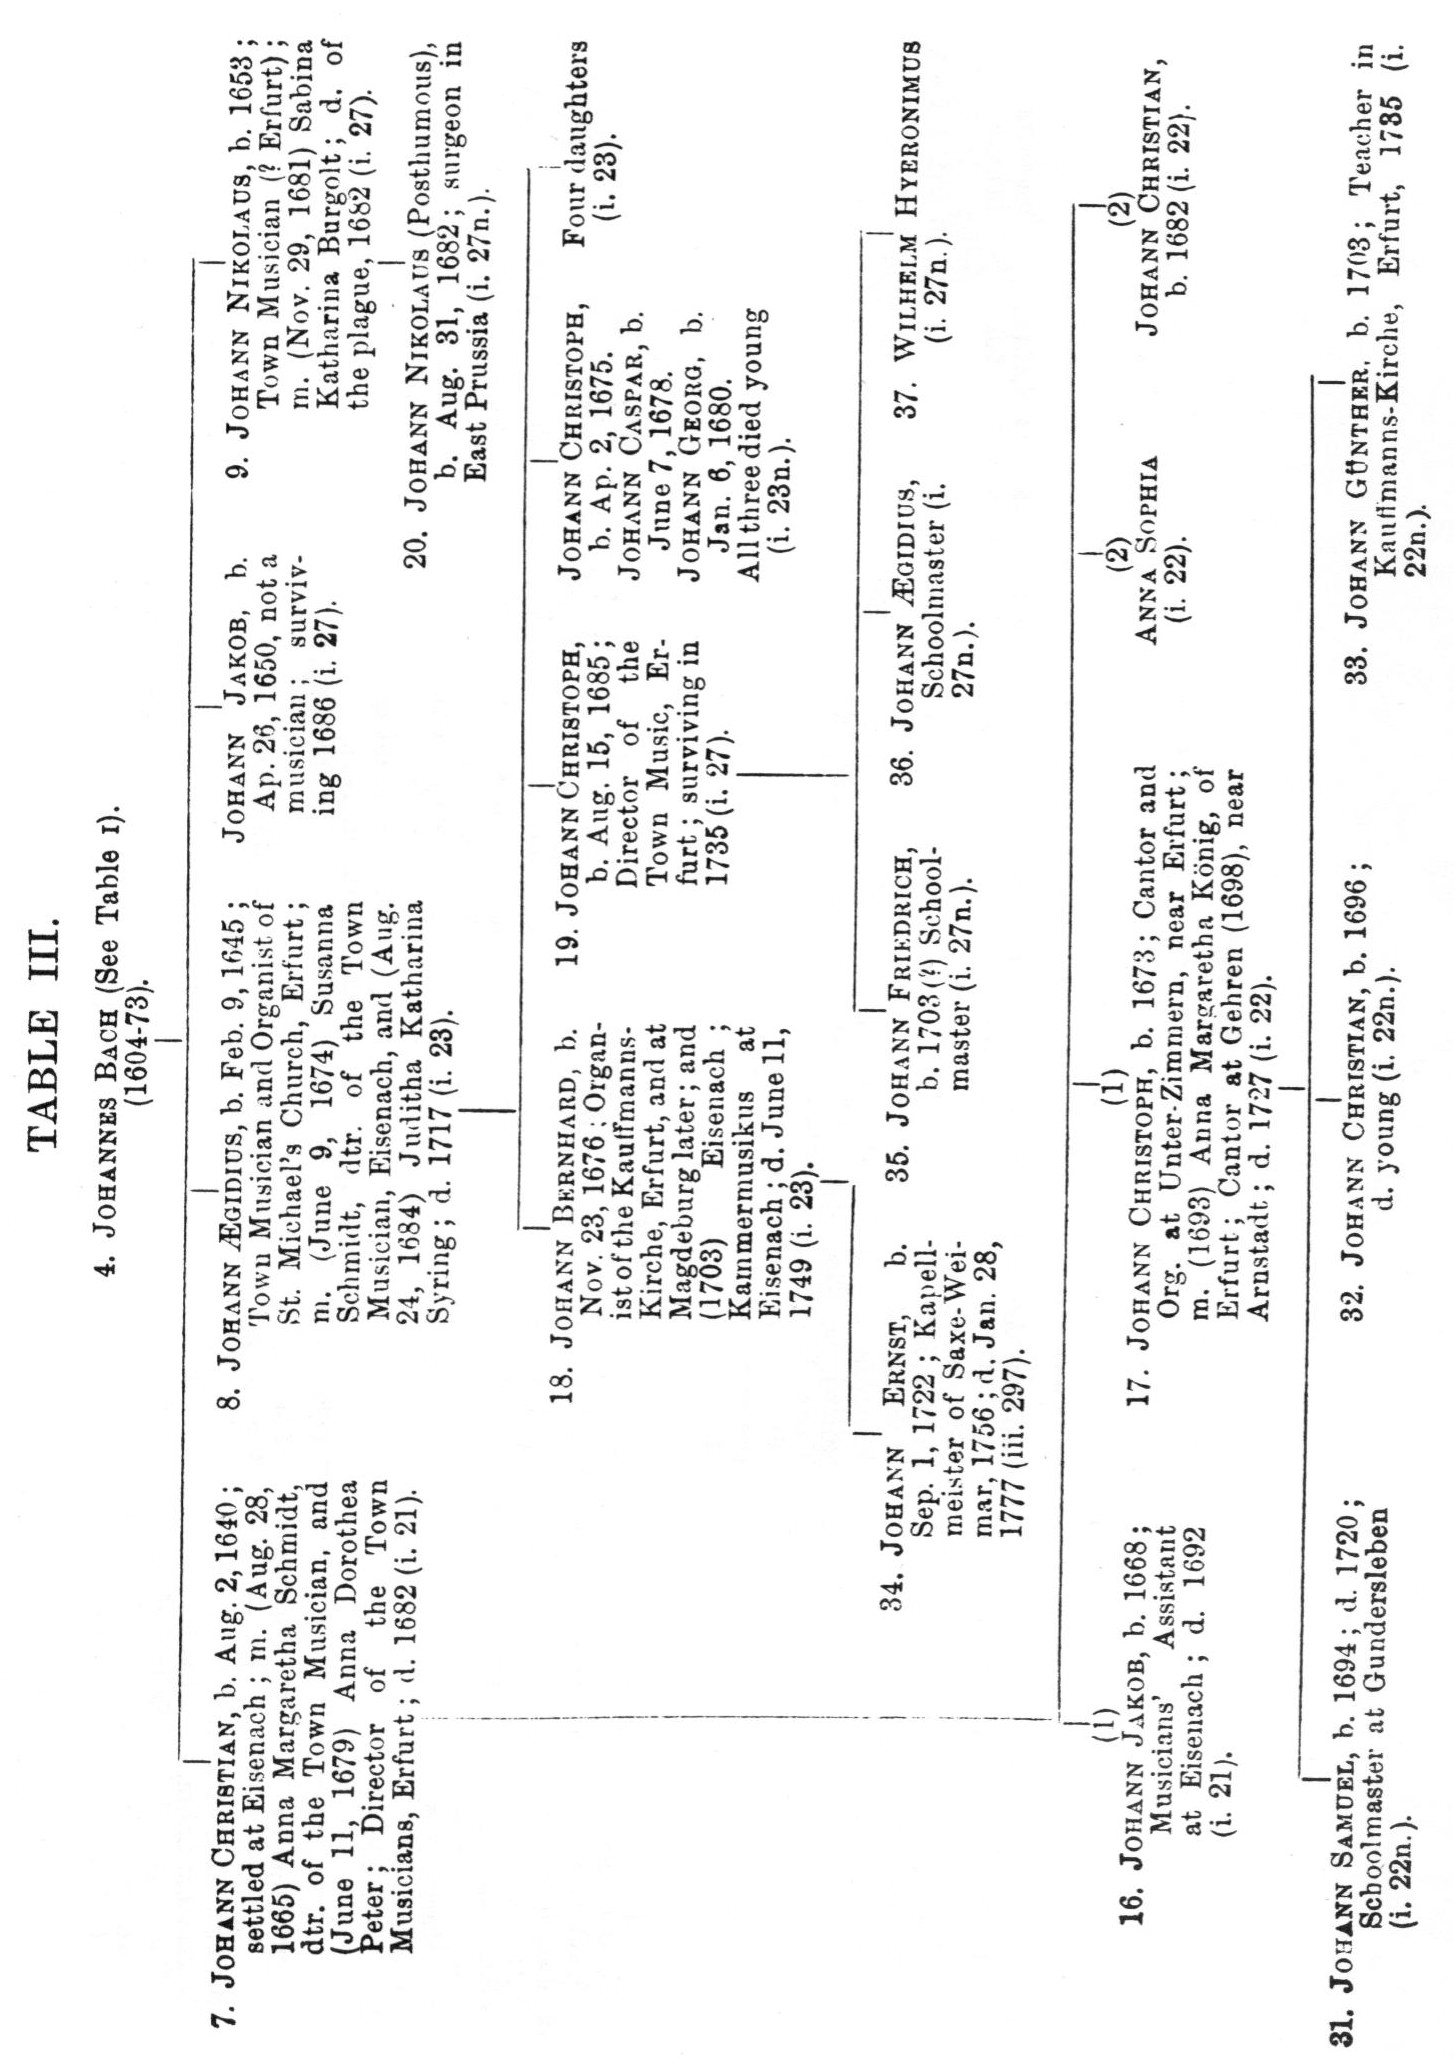 Genealogy Table, p. 305